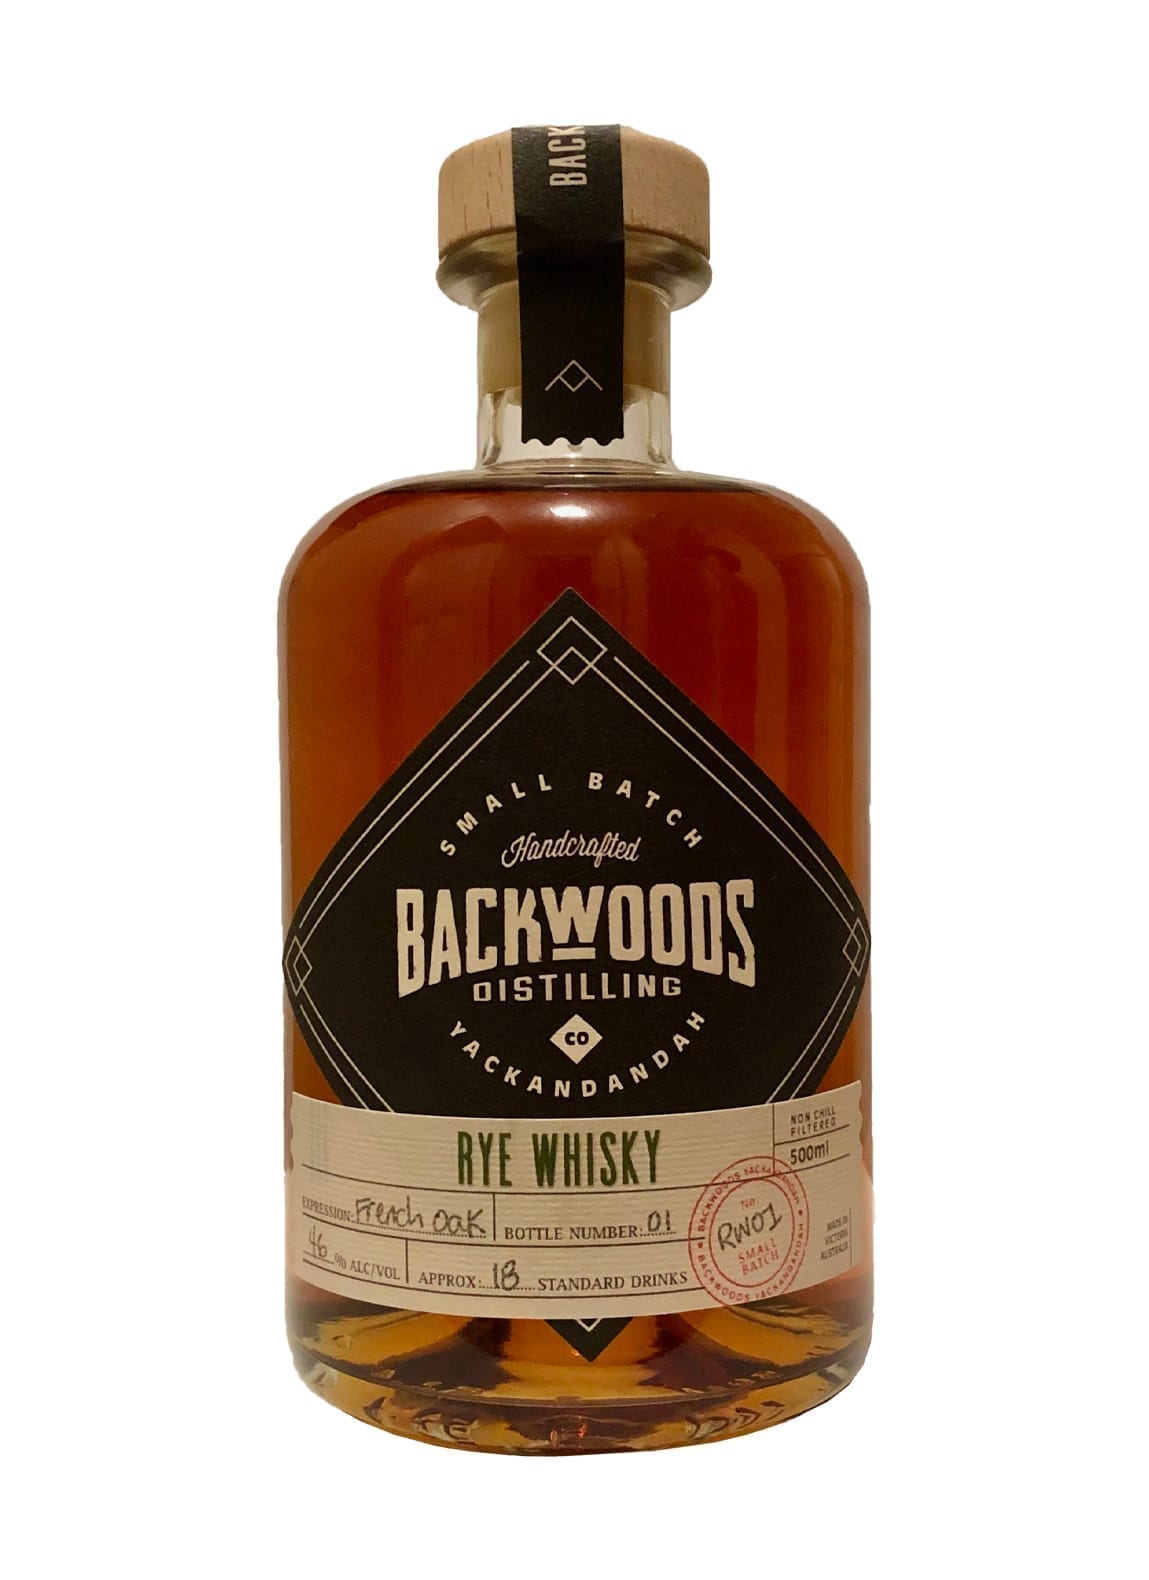 Backwoods Rye Whisky 46% 500ml Batch 2